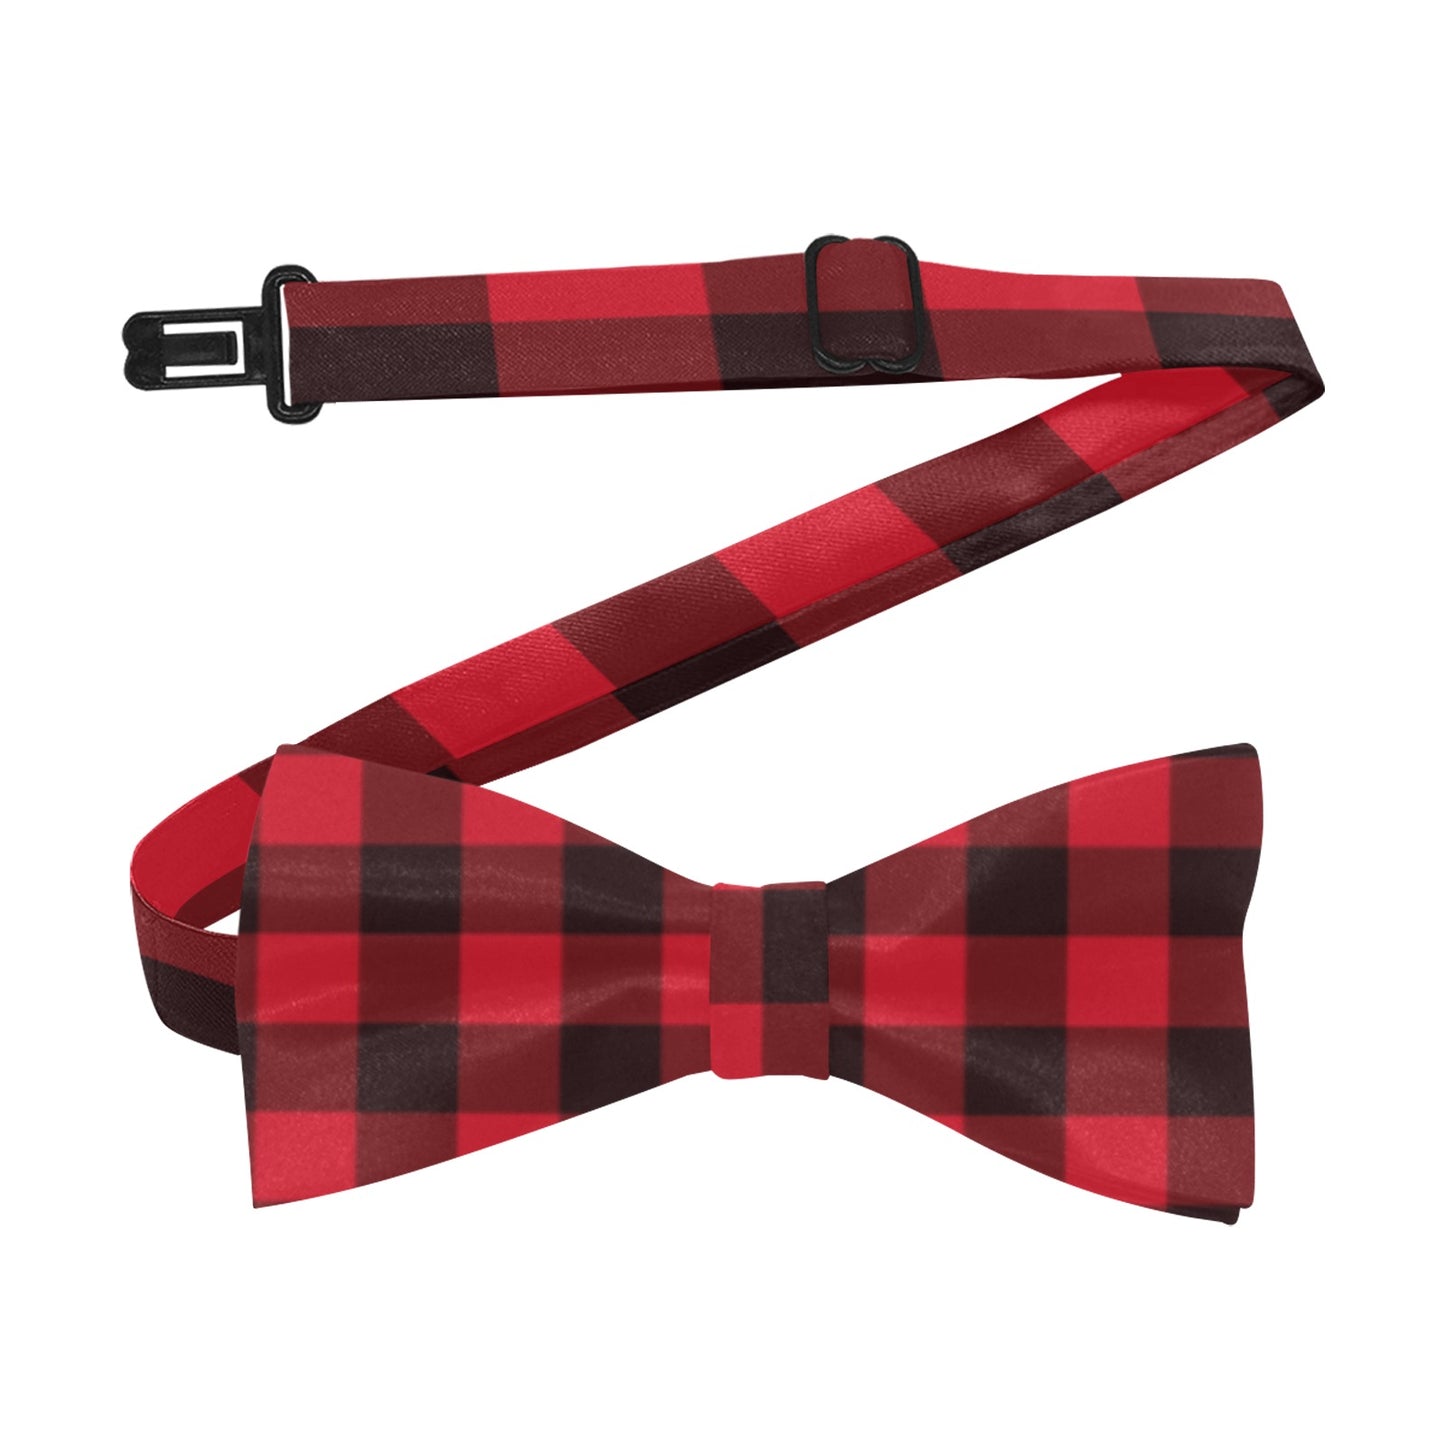 Red Buffalo Plaid Bow Tie, Black Red Check Checkered Classic Chic Adjustable Pre Tied Bowtie Gift Him Men Tuxedo Groomsmen Necktie Wedding